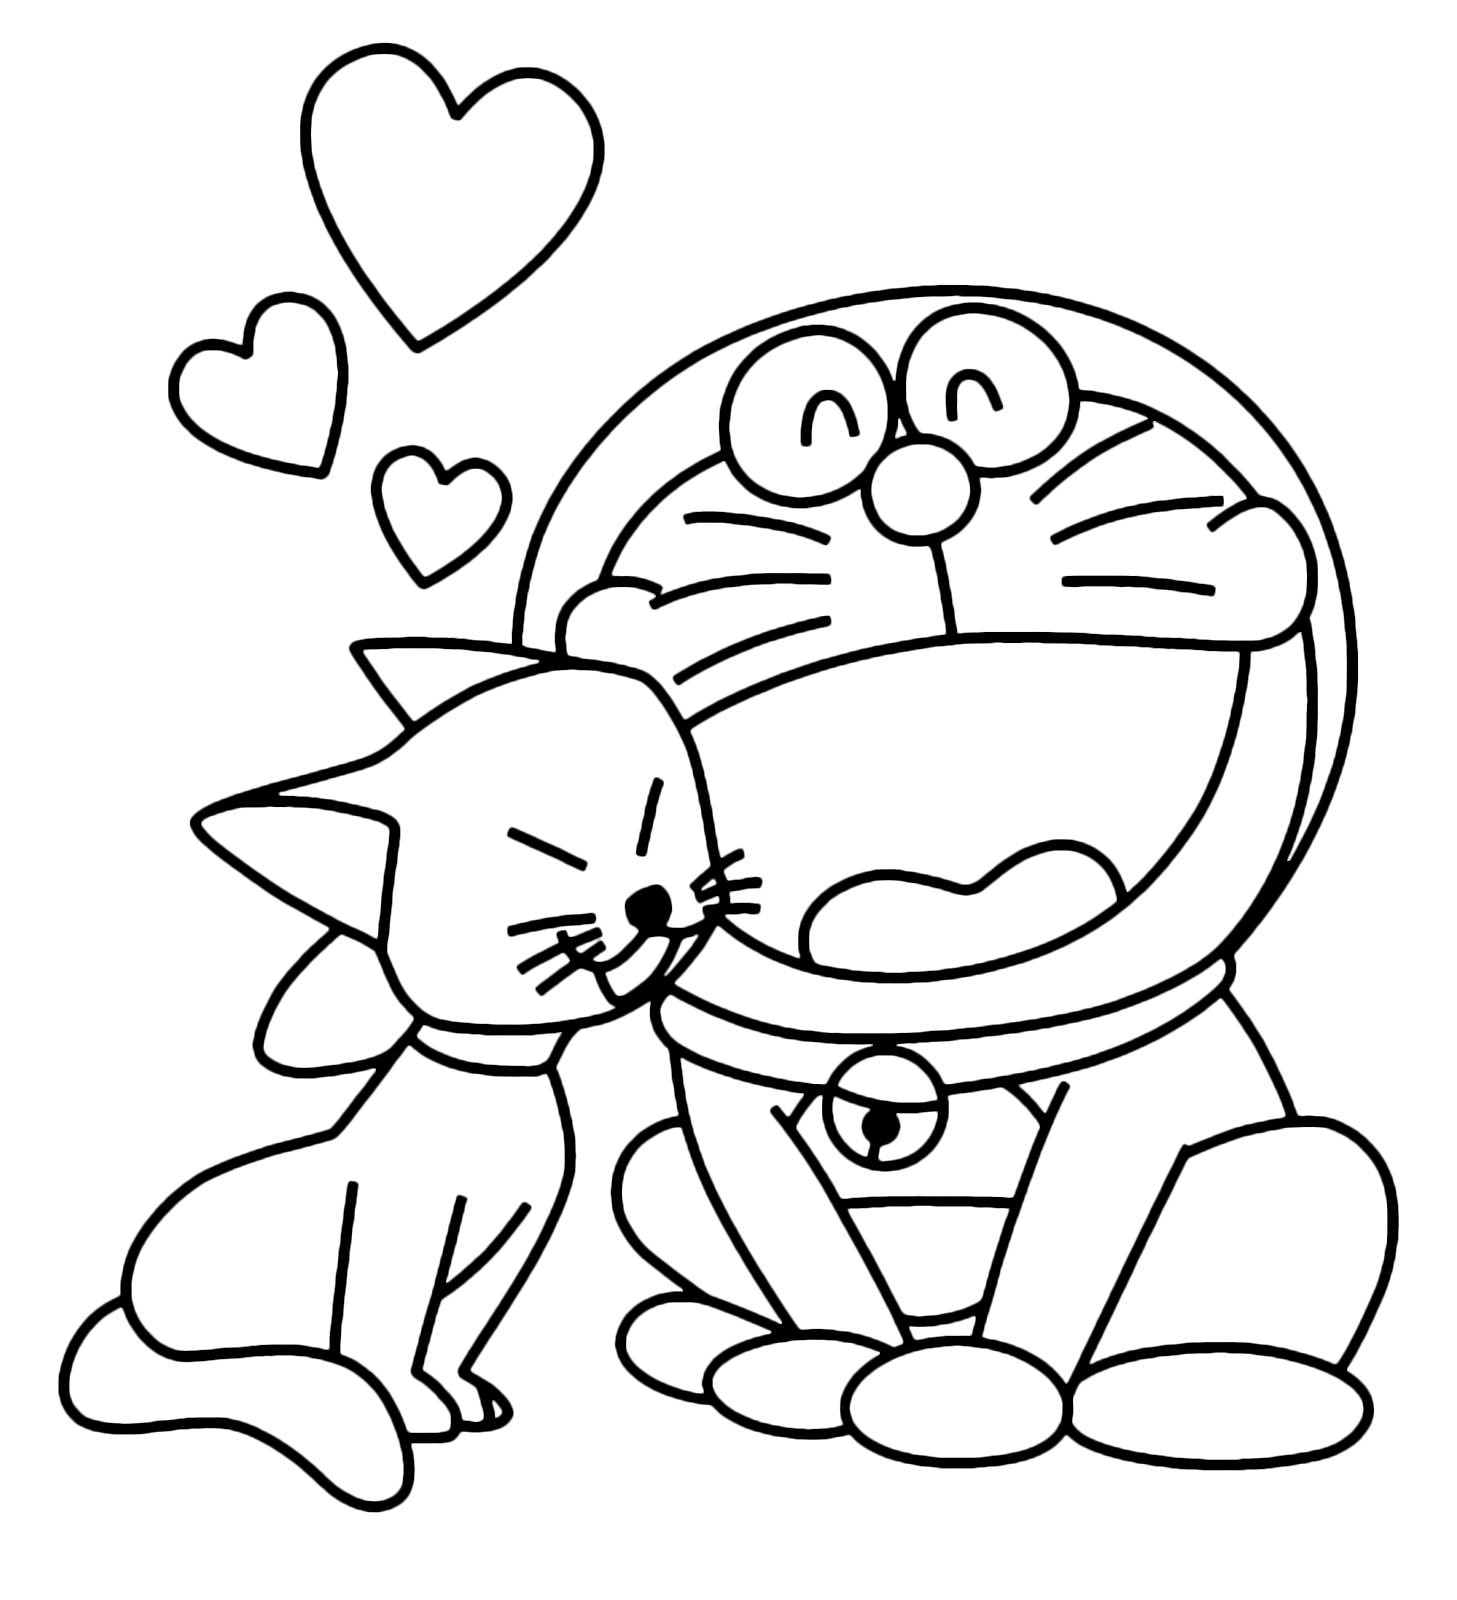 Doraemon - Doraemon in love with a cat